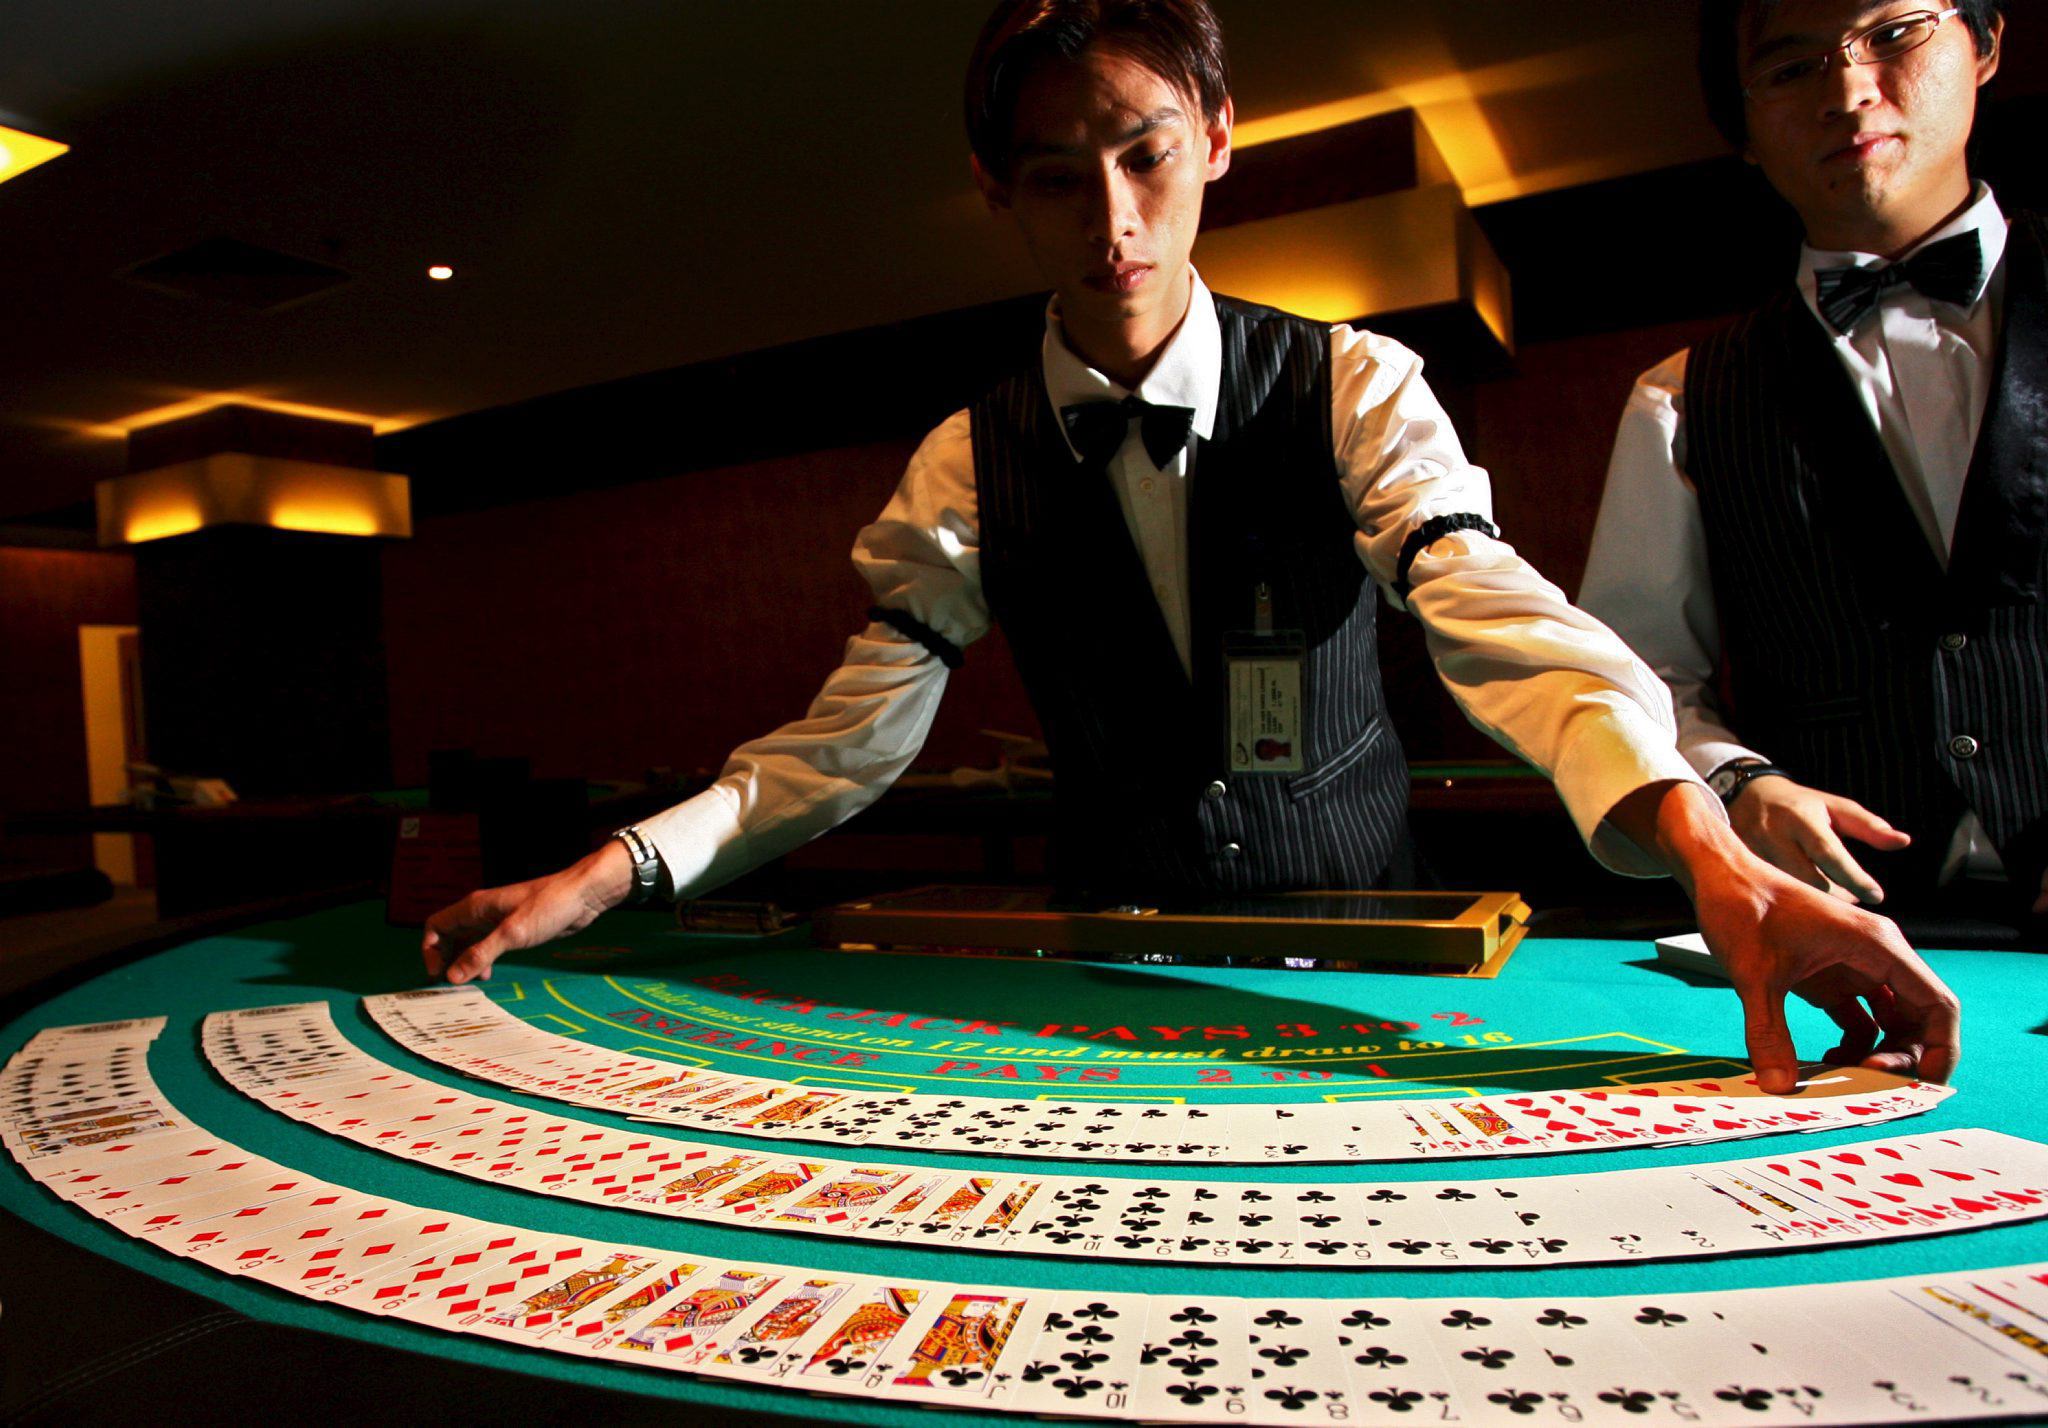 Развлечений азарта. Казино. Мужчина в казино. Казино азарт. Азартный игрок казино.